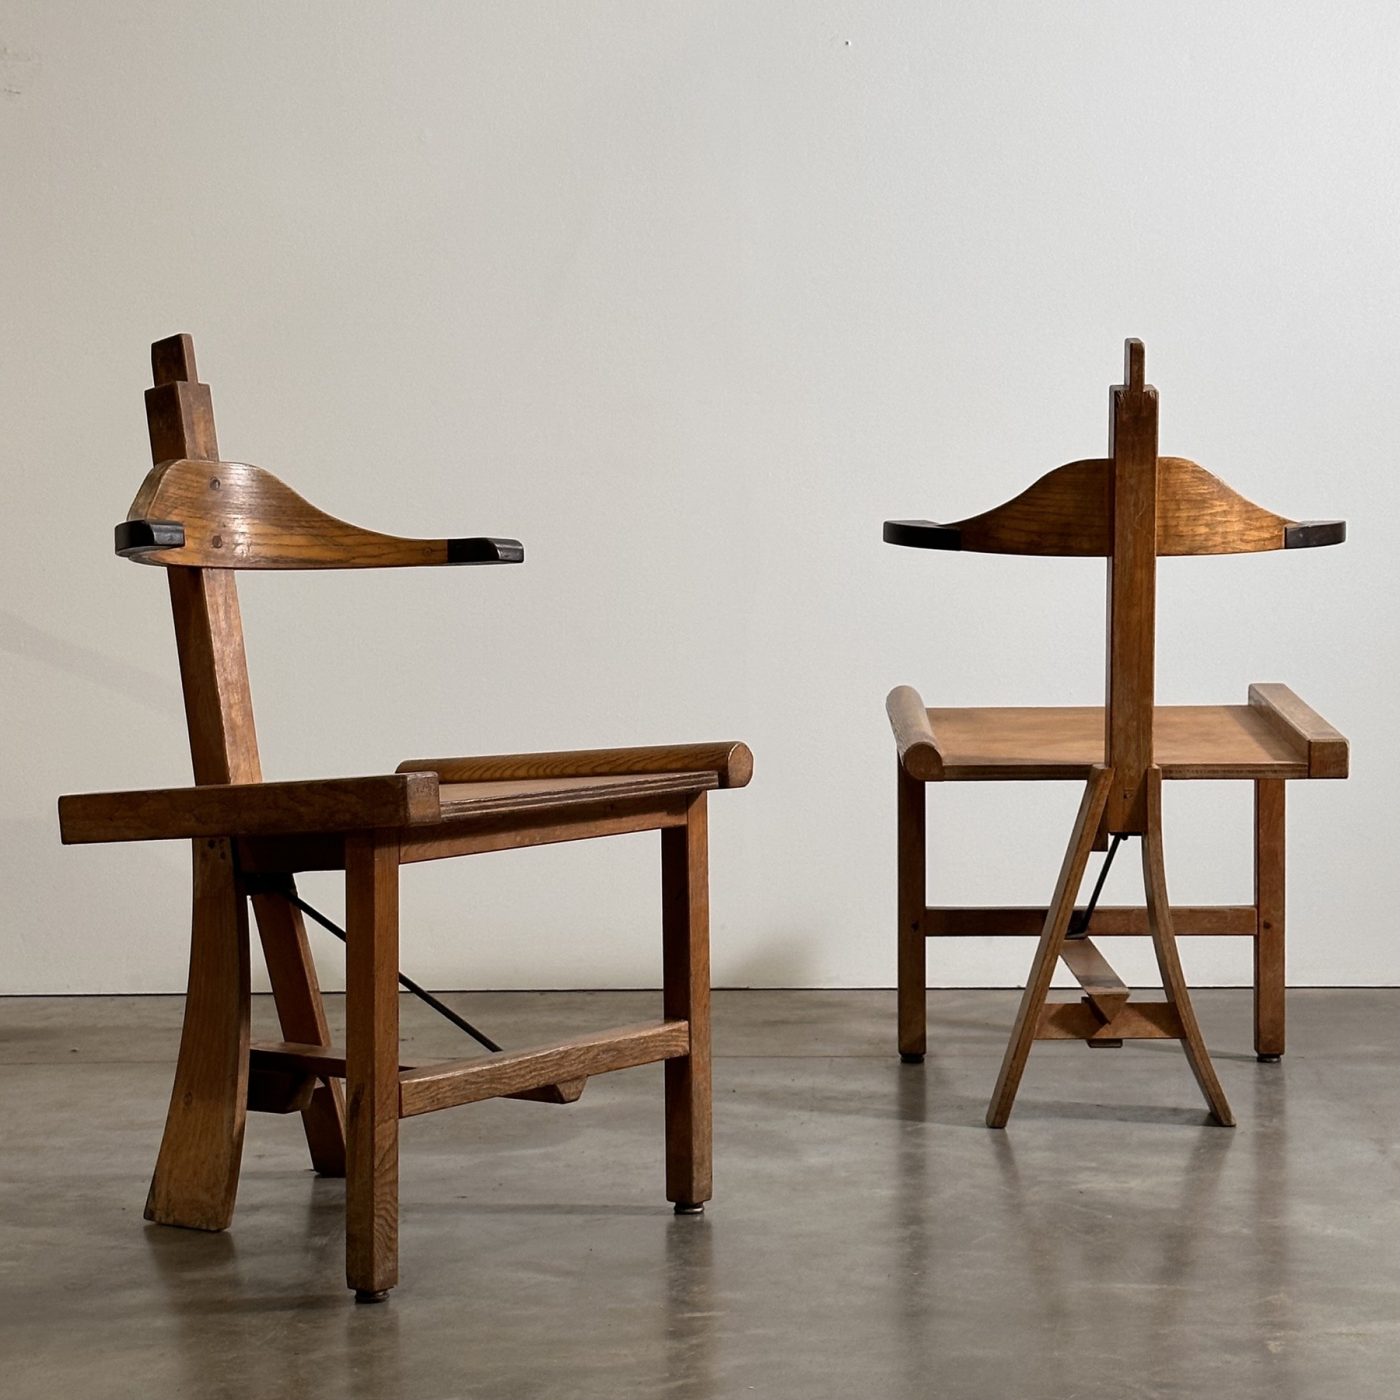 objet-vagabond-curious-chairs0015